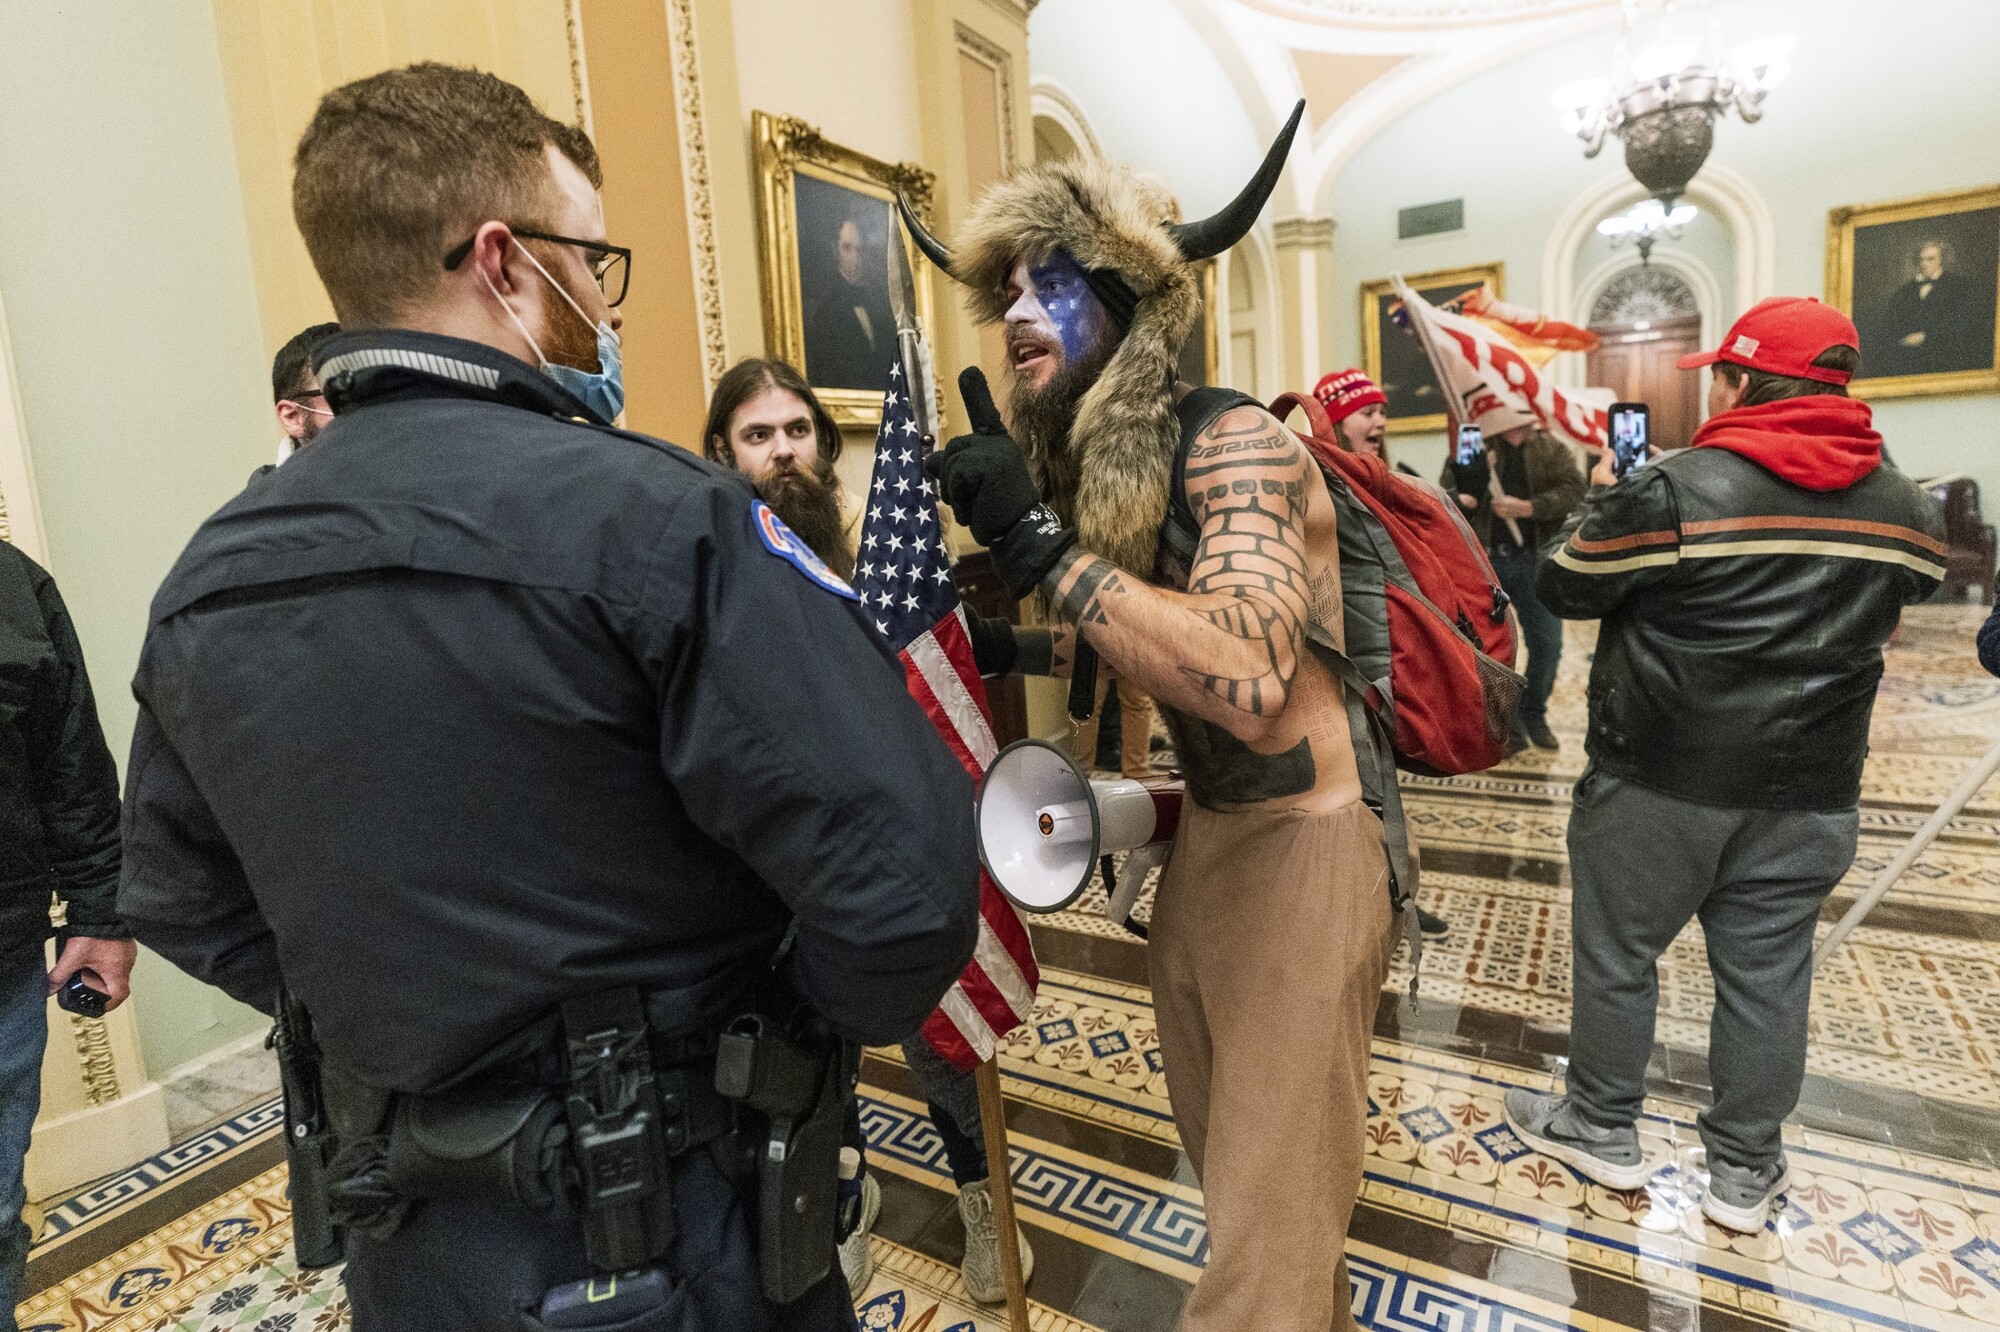 Feds Arrest Man in Horned Helmet Who Entered the Capitol During Jan. 6 Protest